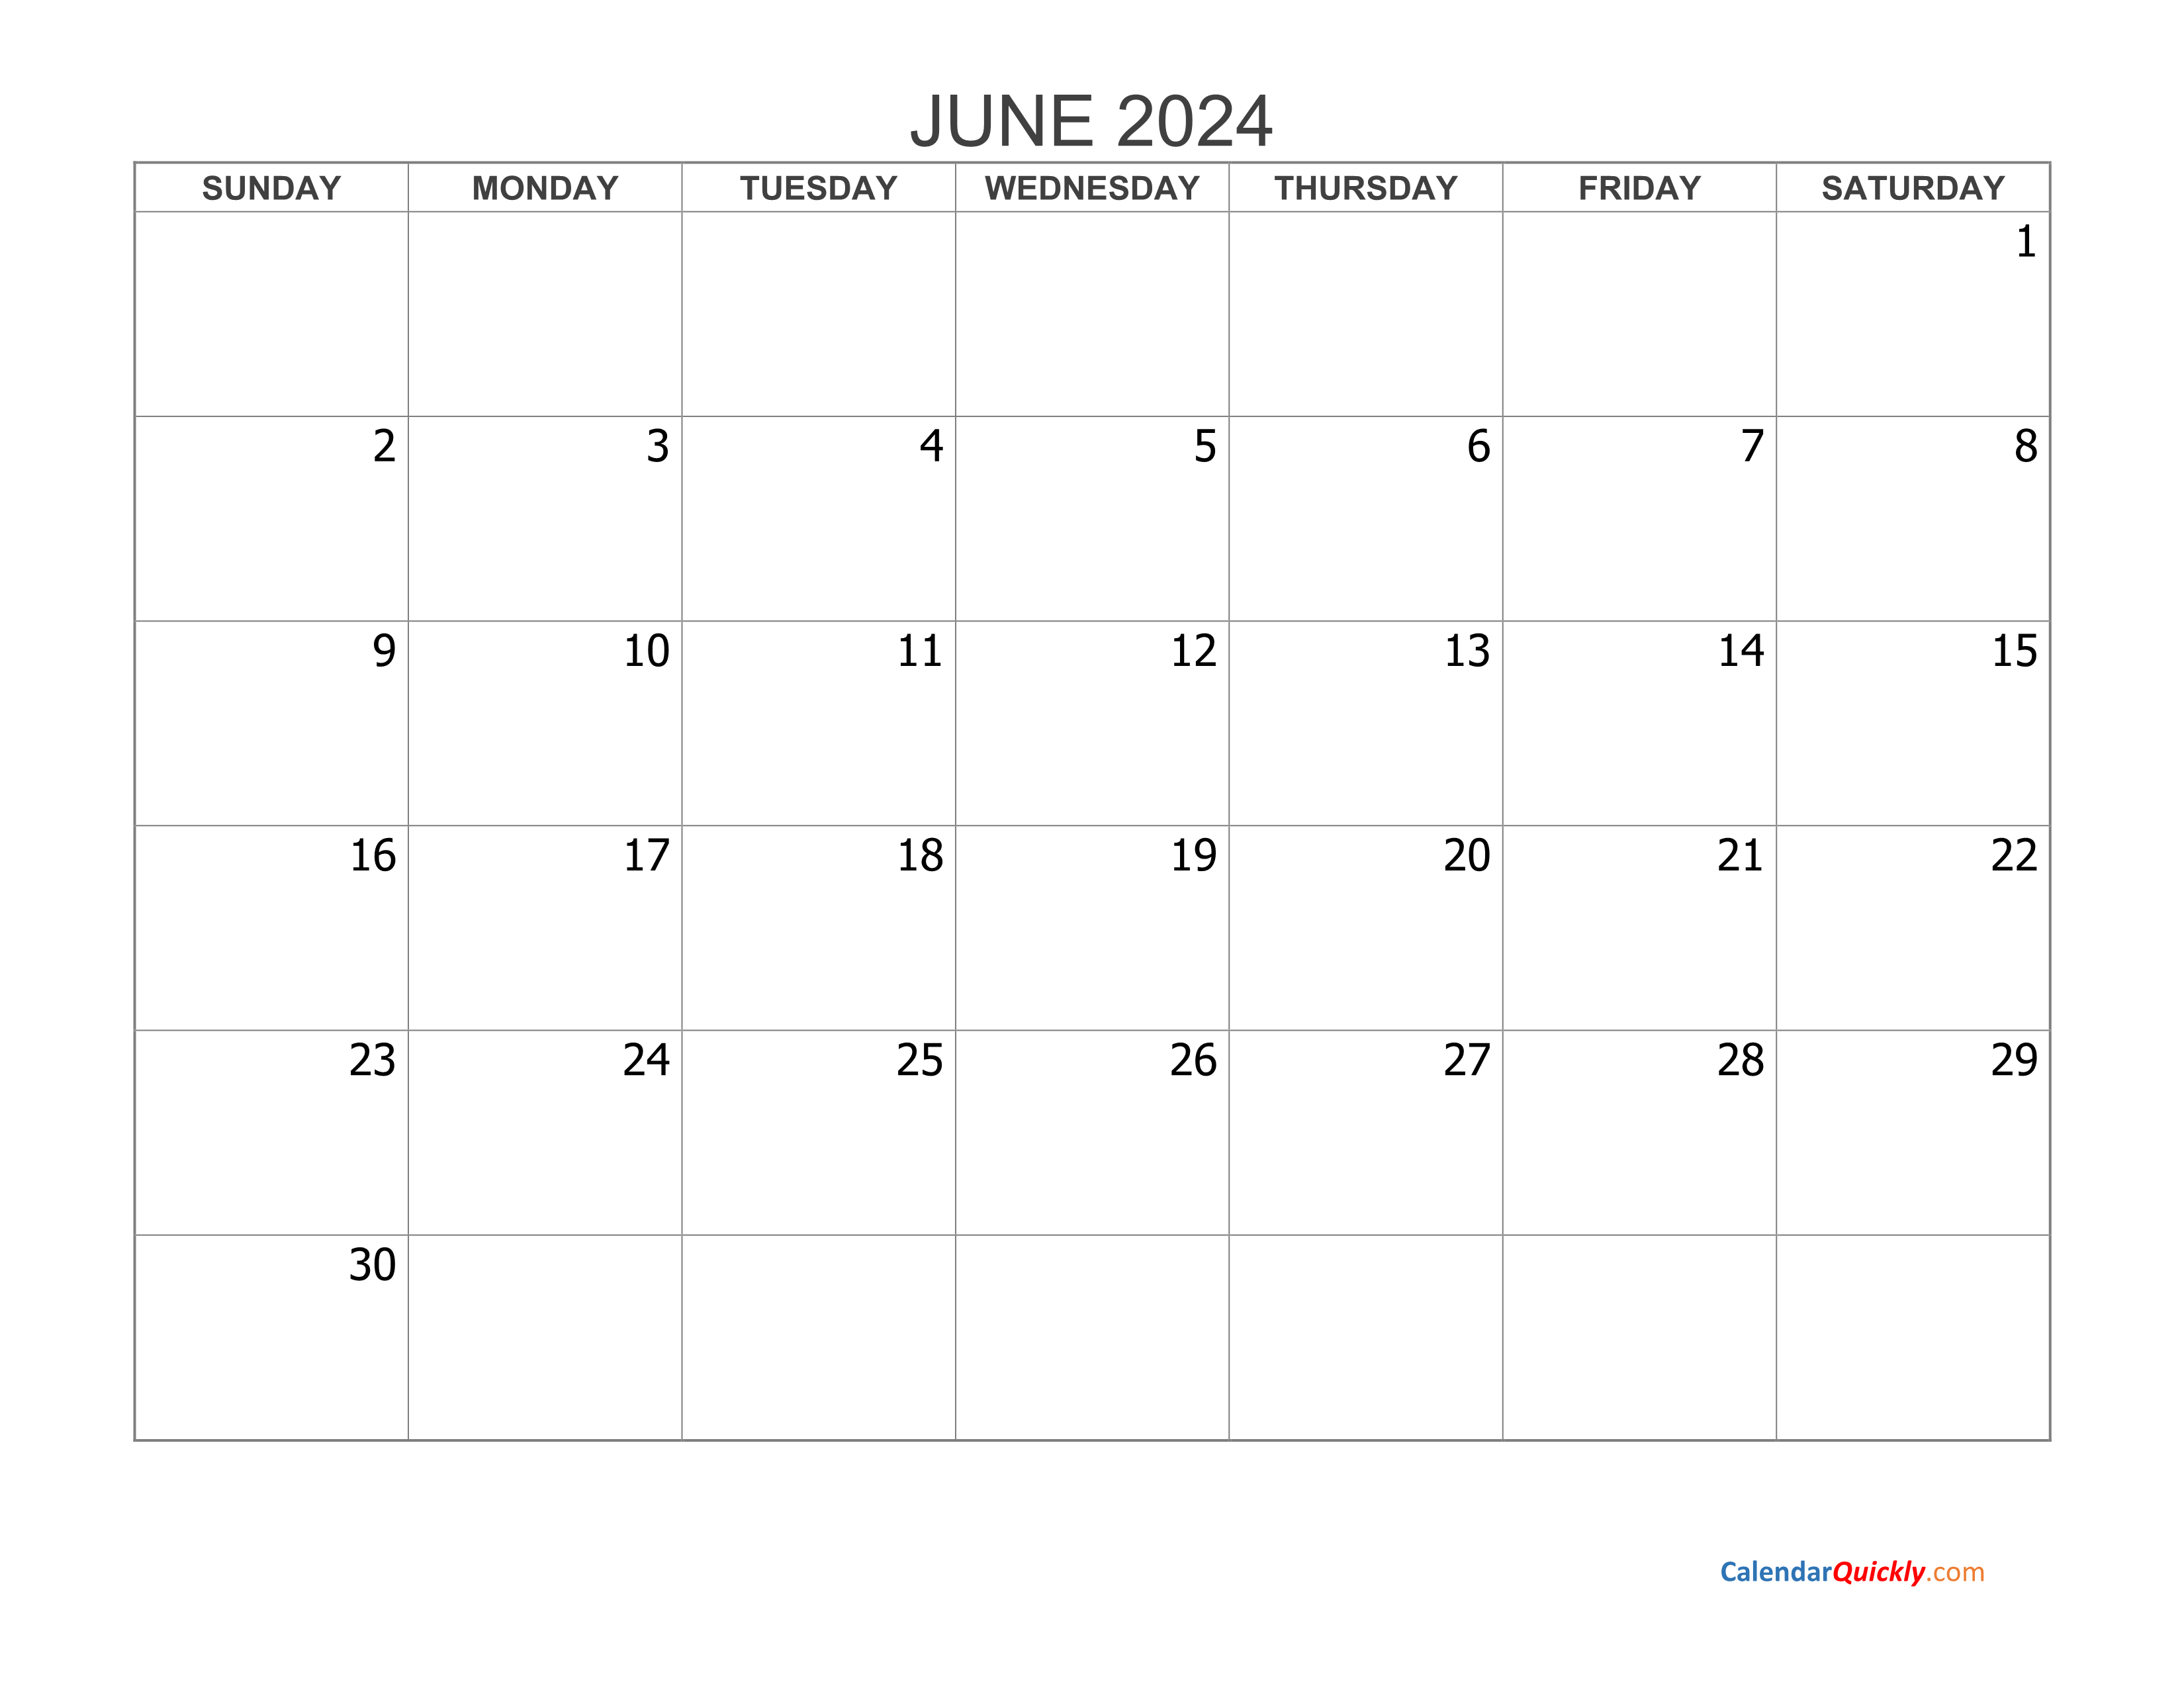 June 2024 Blank Calendar Calendar Quickly